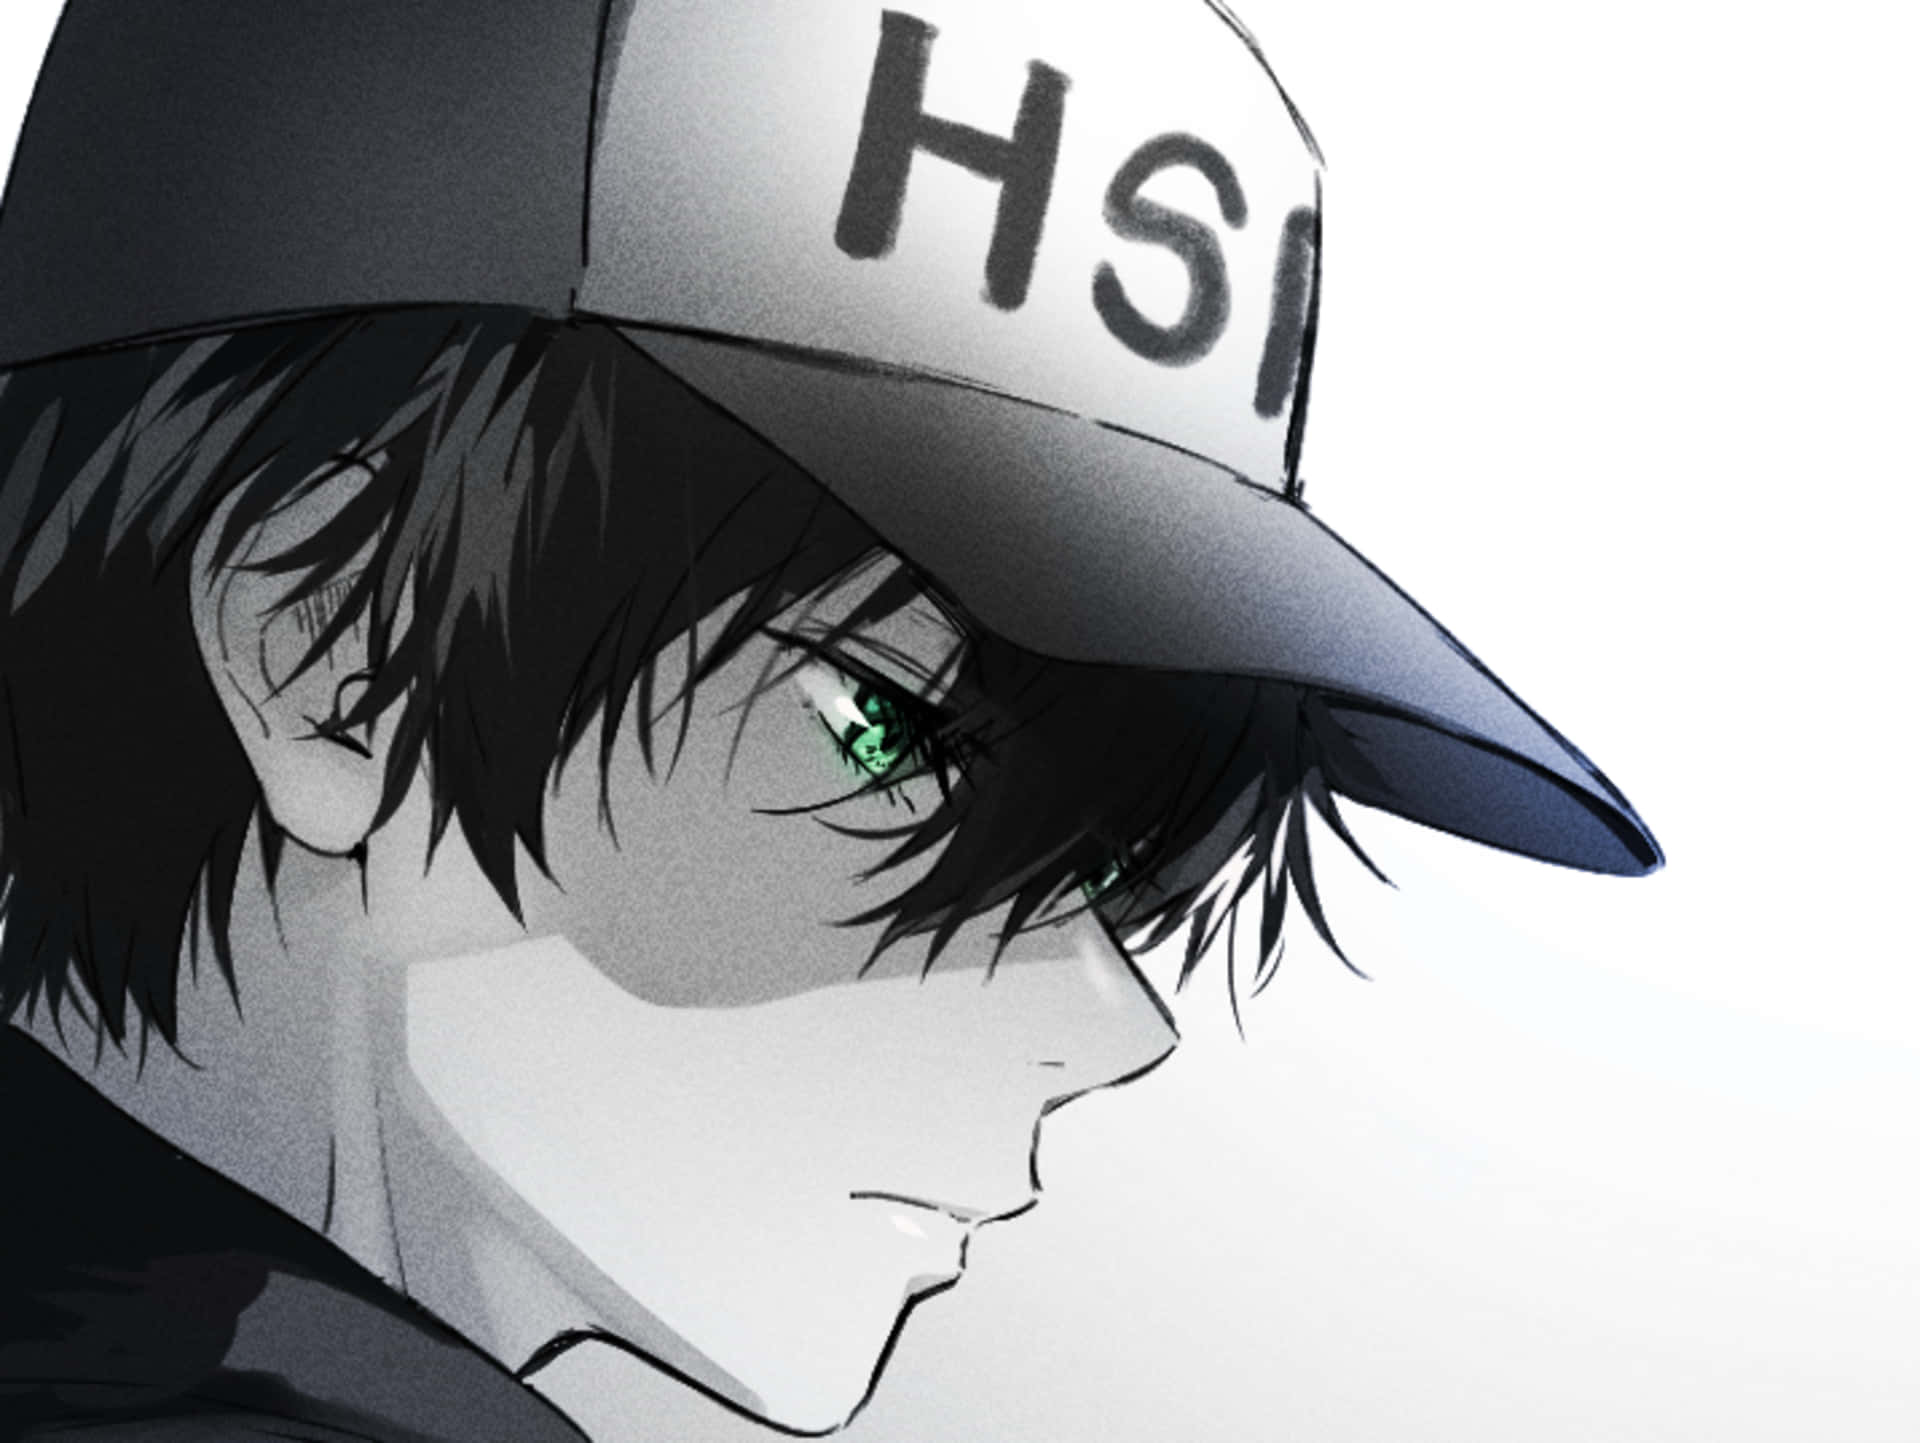 Hotaro Oreki Side Profile With A Cap